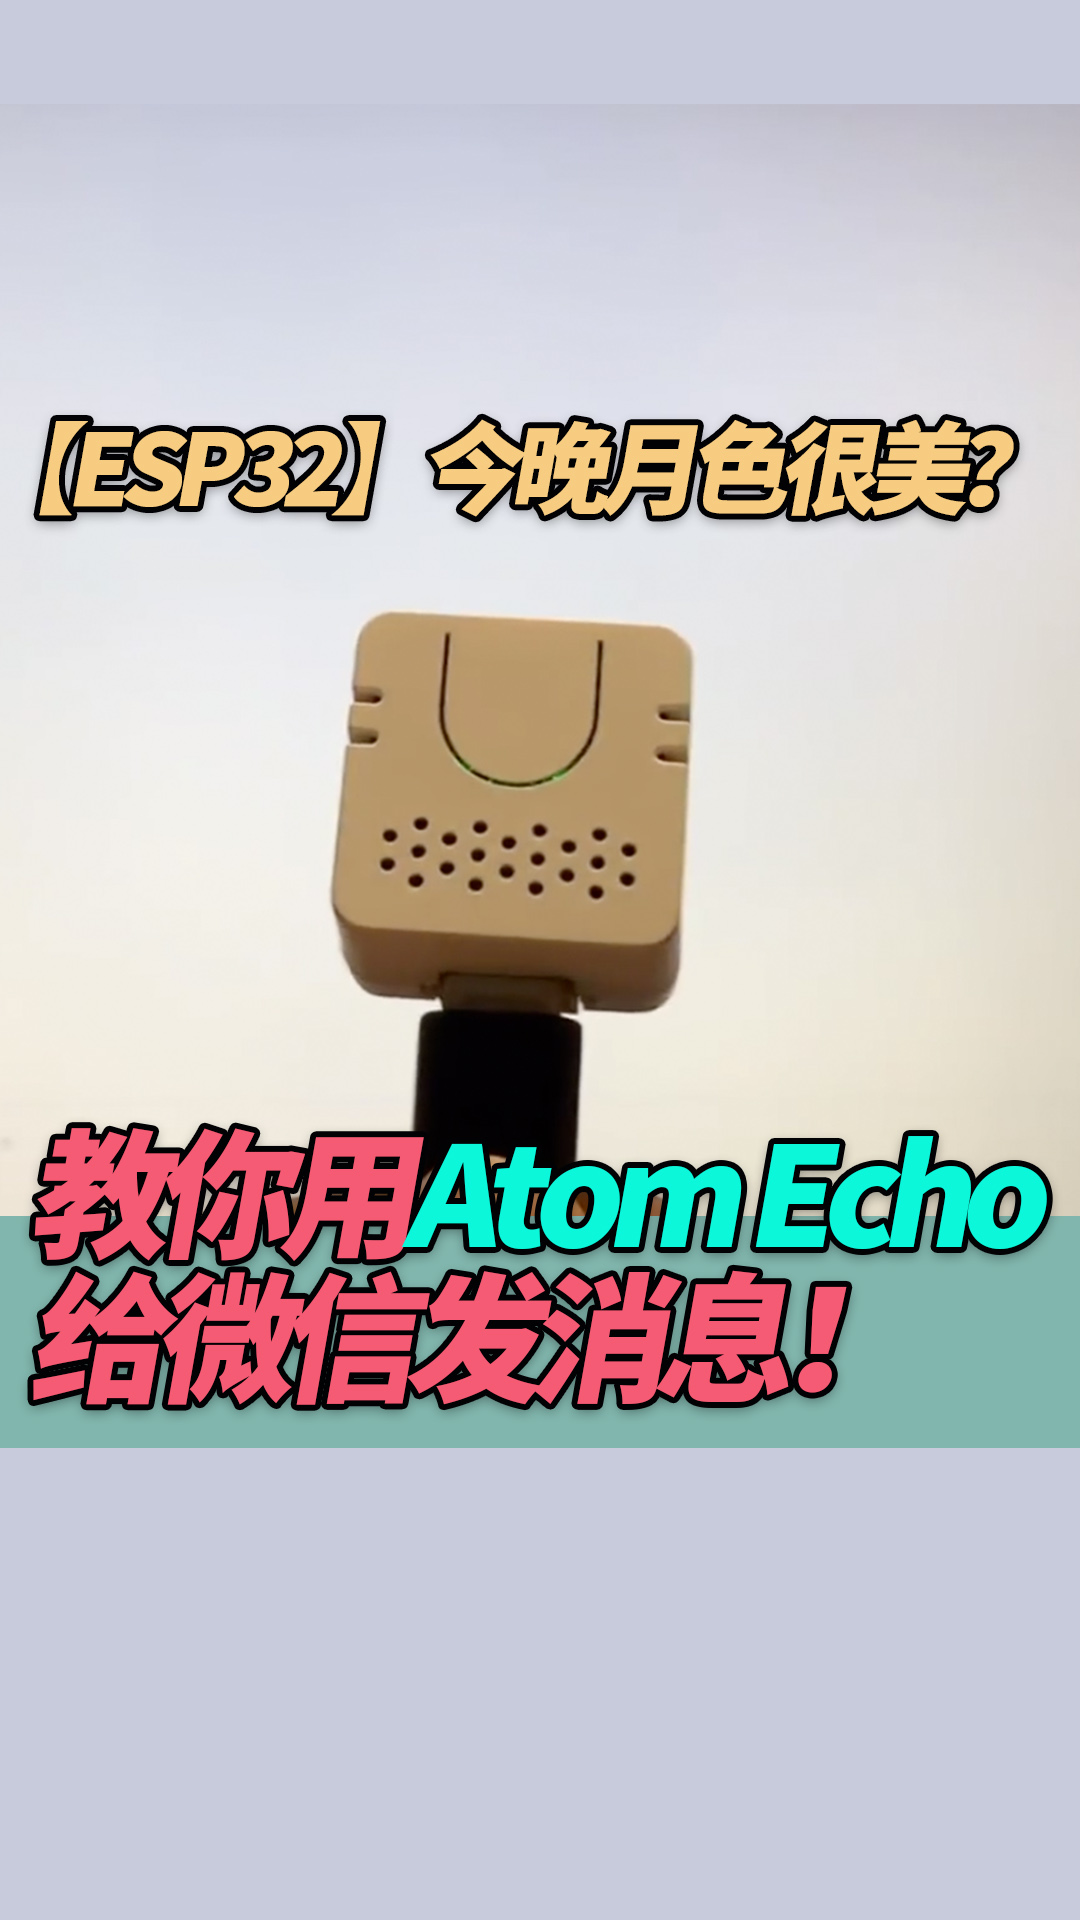 【ESP32】教你用Atom Echo给微信发消息！今晚月色很美？#ESP32 